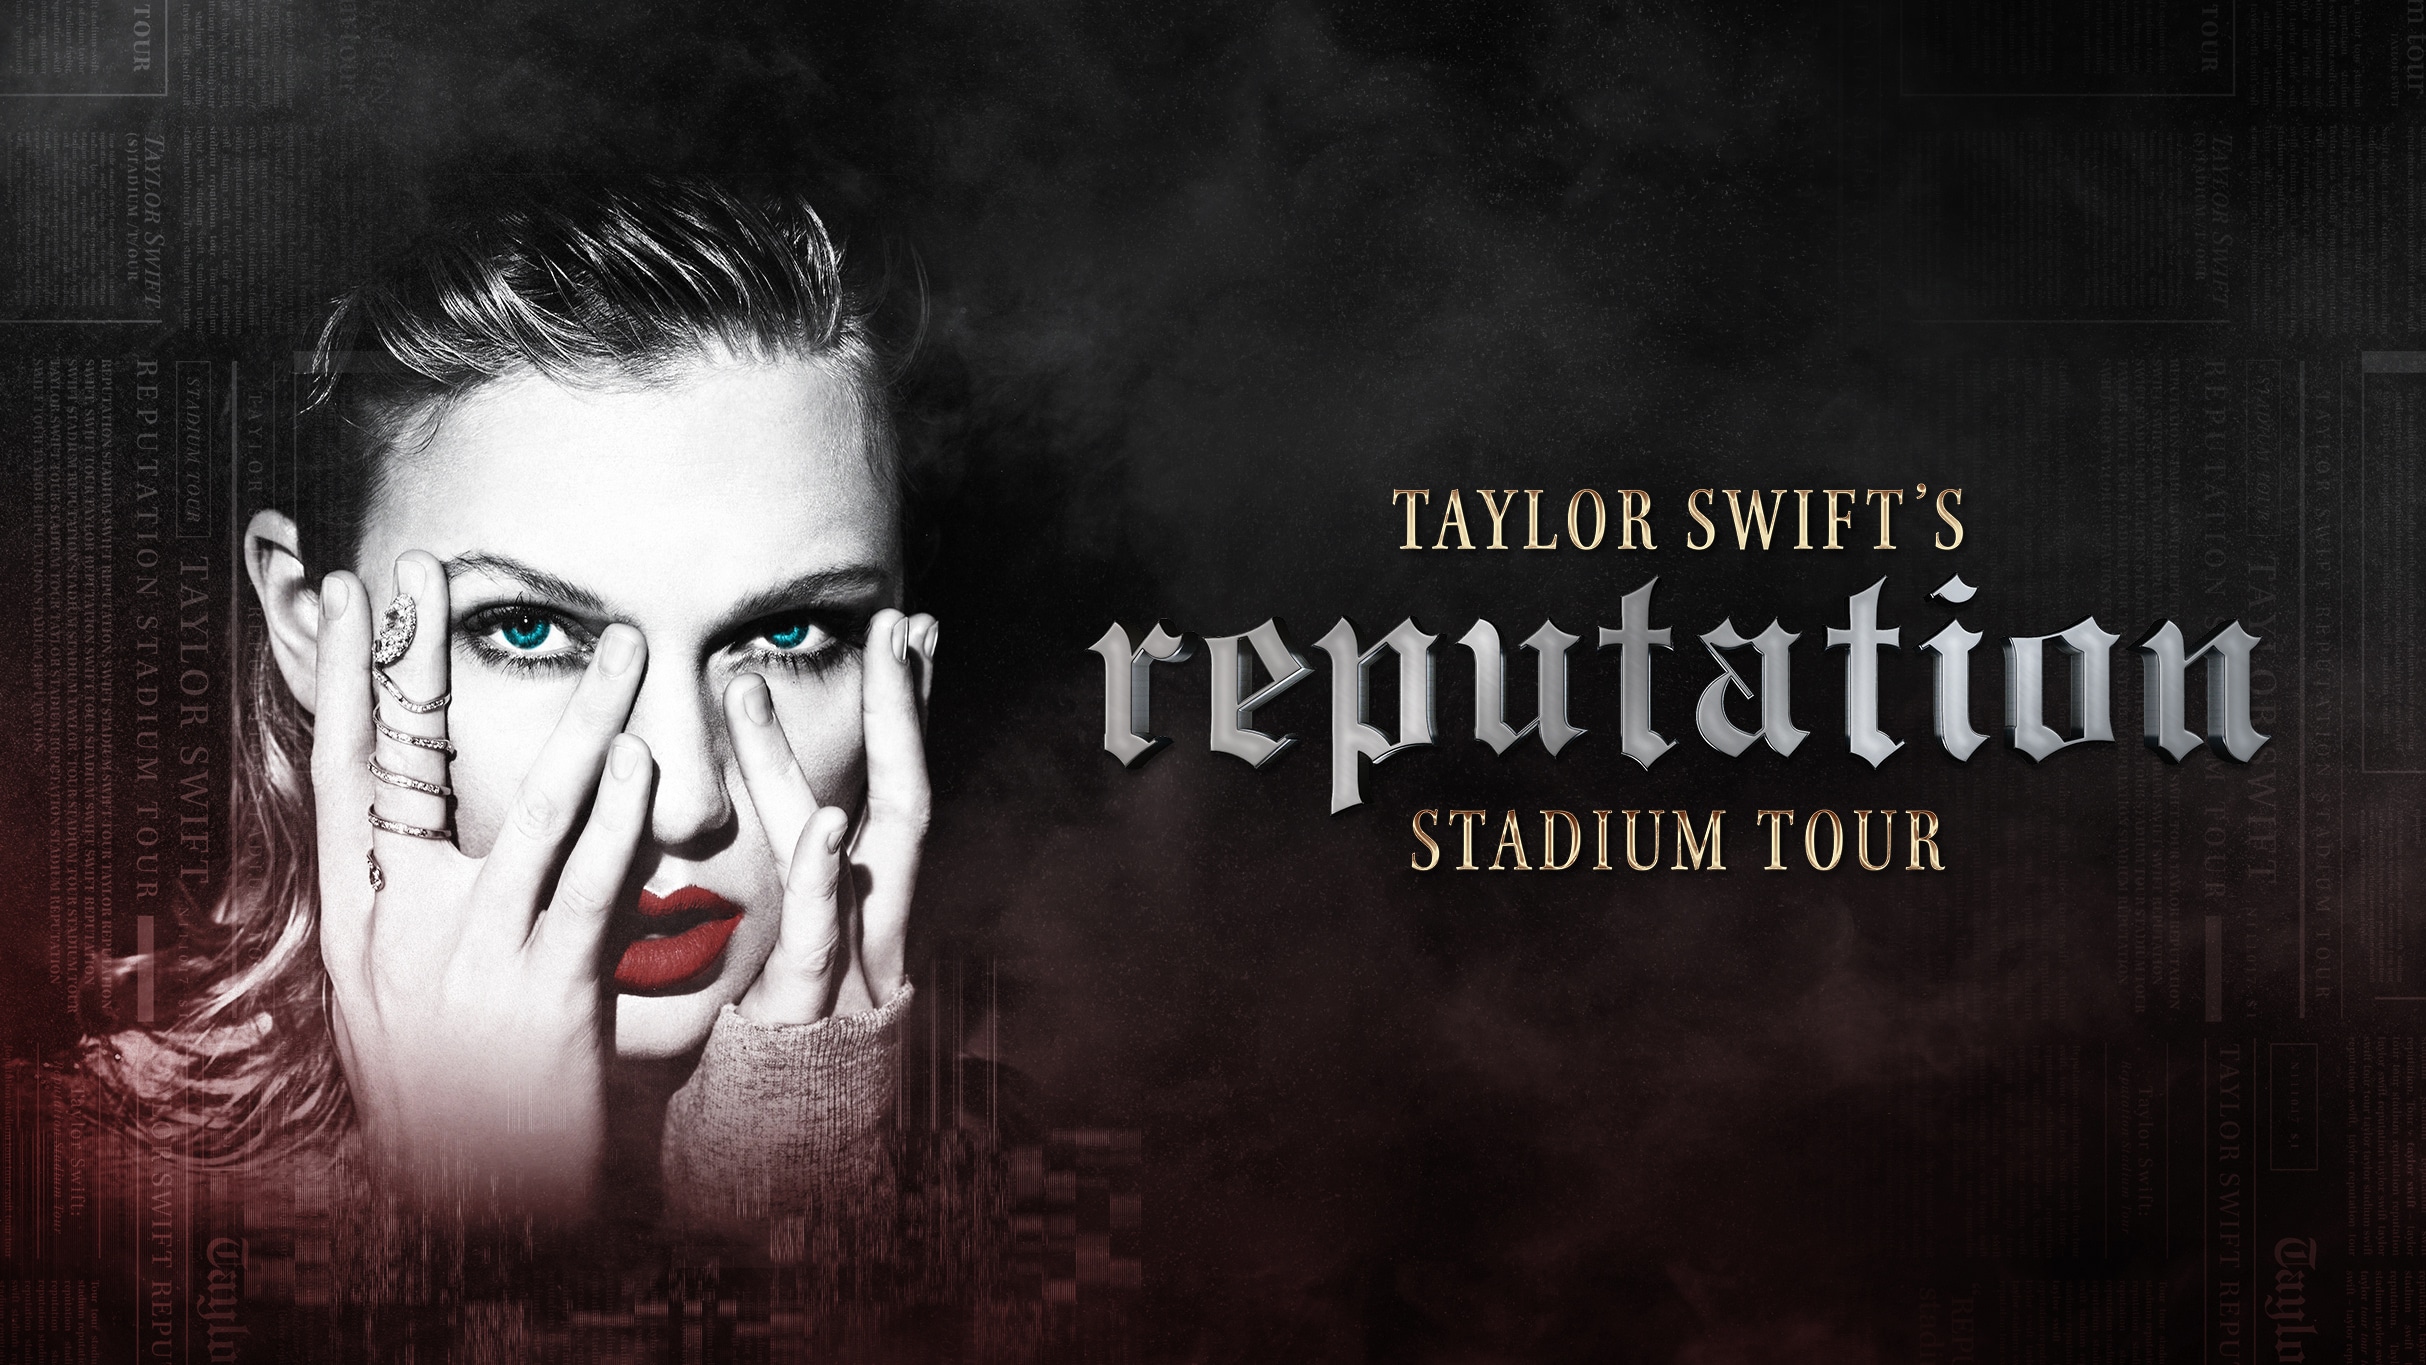 Reputation. Reputation Taylor Swift Stadium Tour билет. Reputation Stadium Tour logo. Taylor Swift reputation era. Taylor Swift reputation Stadium Tour рисунок.